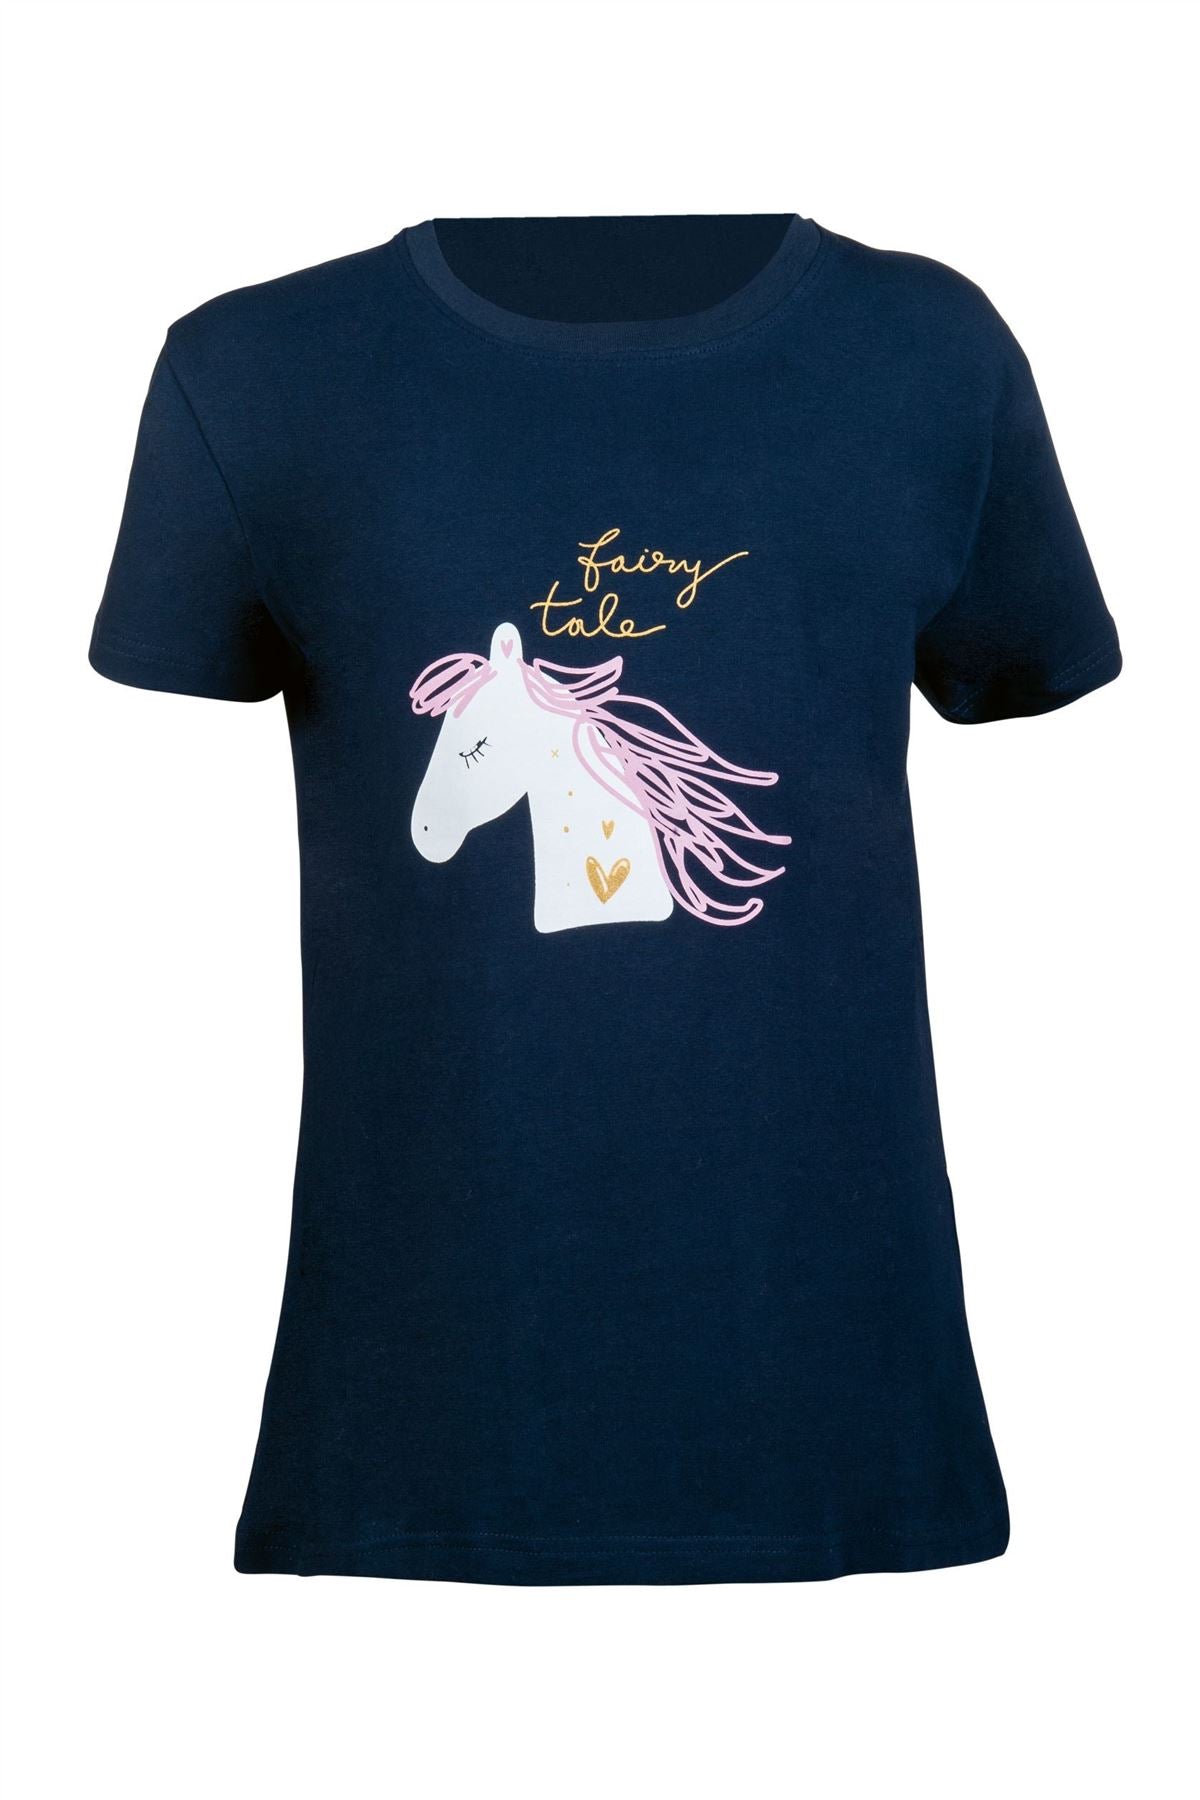 HKM Kids Tshirt Fairy Tale - Just Horse Riders